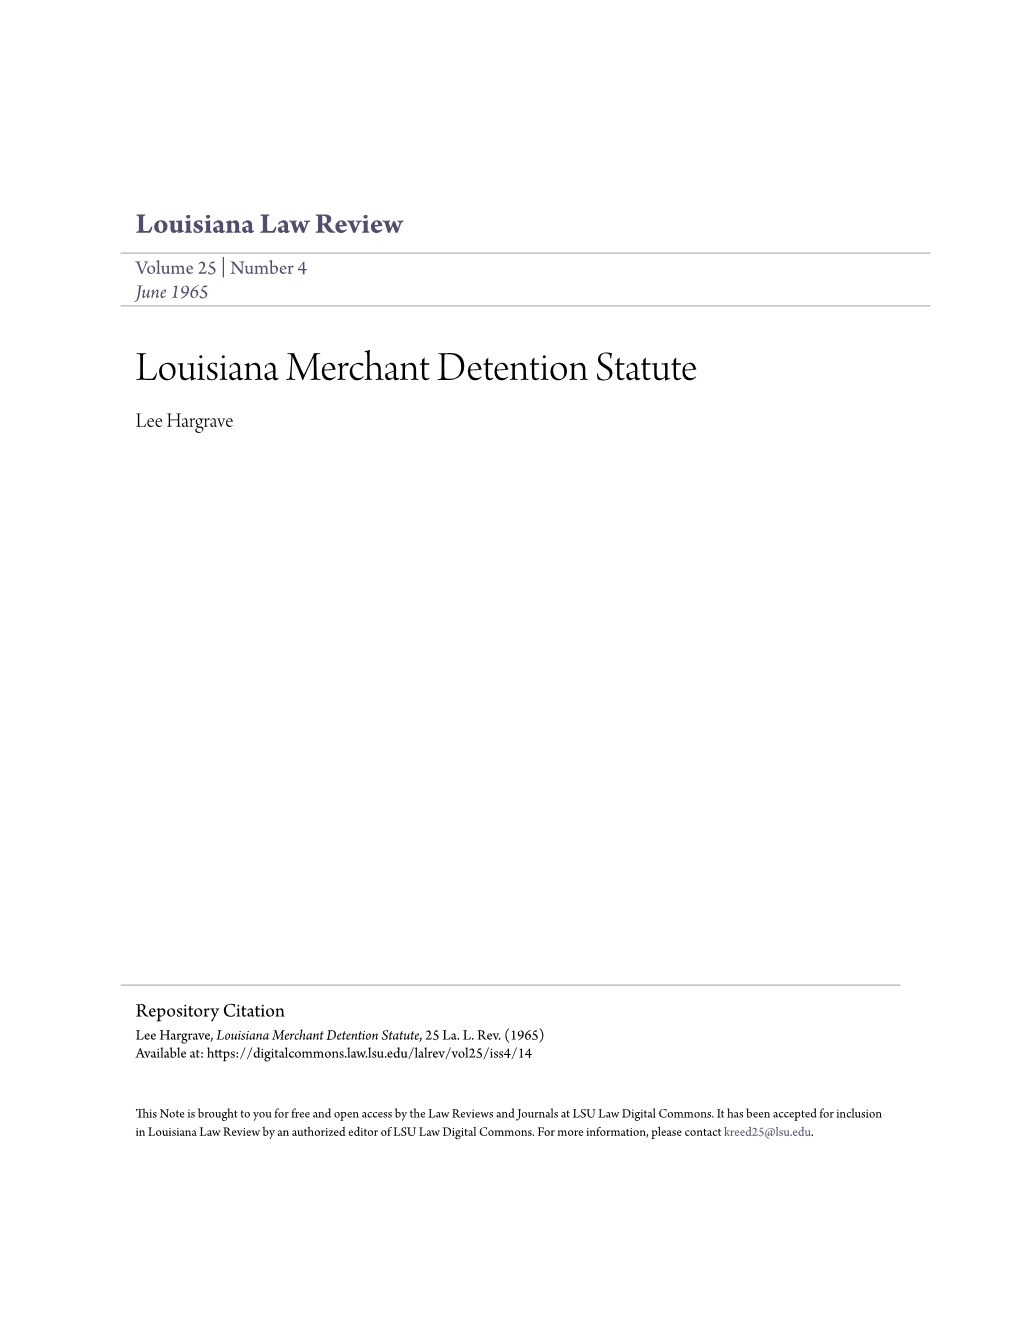 Louisiana Merchant Detention Statute Lee Hargrave